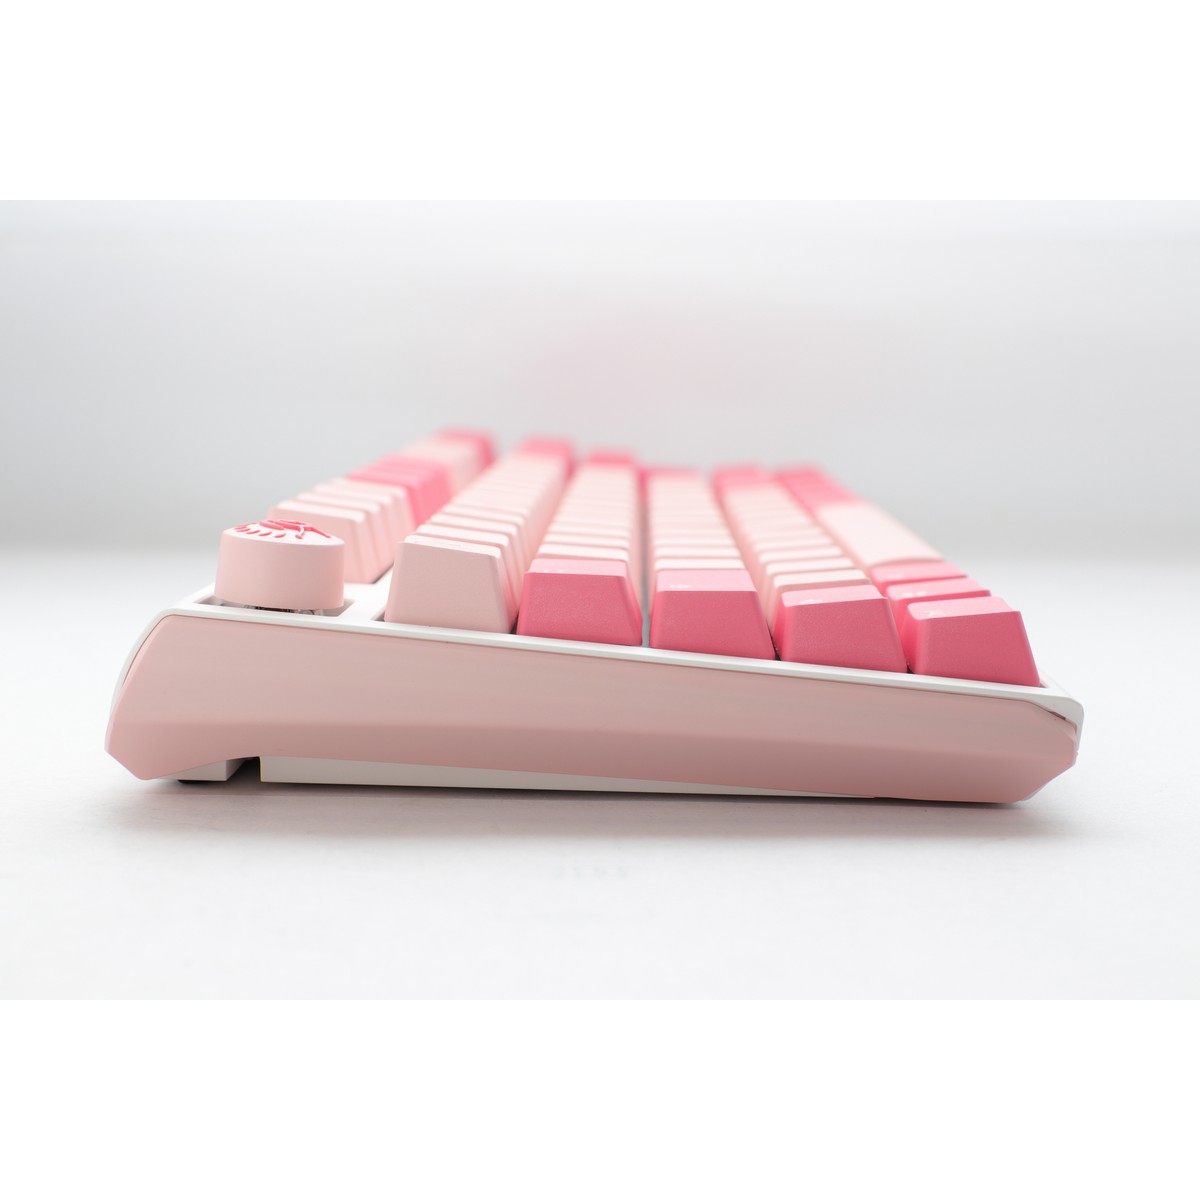 Ducky - Ducky One 3 Gossamer Pink TKL 80% USB Cherry MX Blue Mechanical Gaming Keyboard